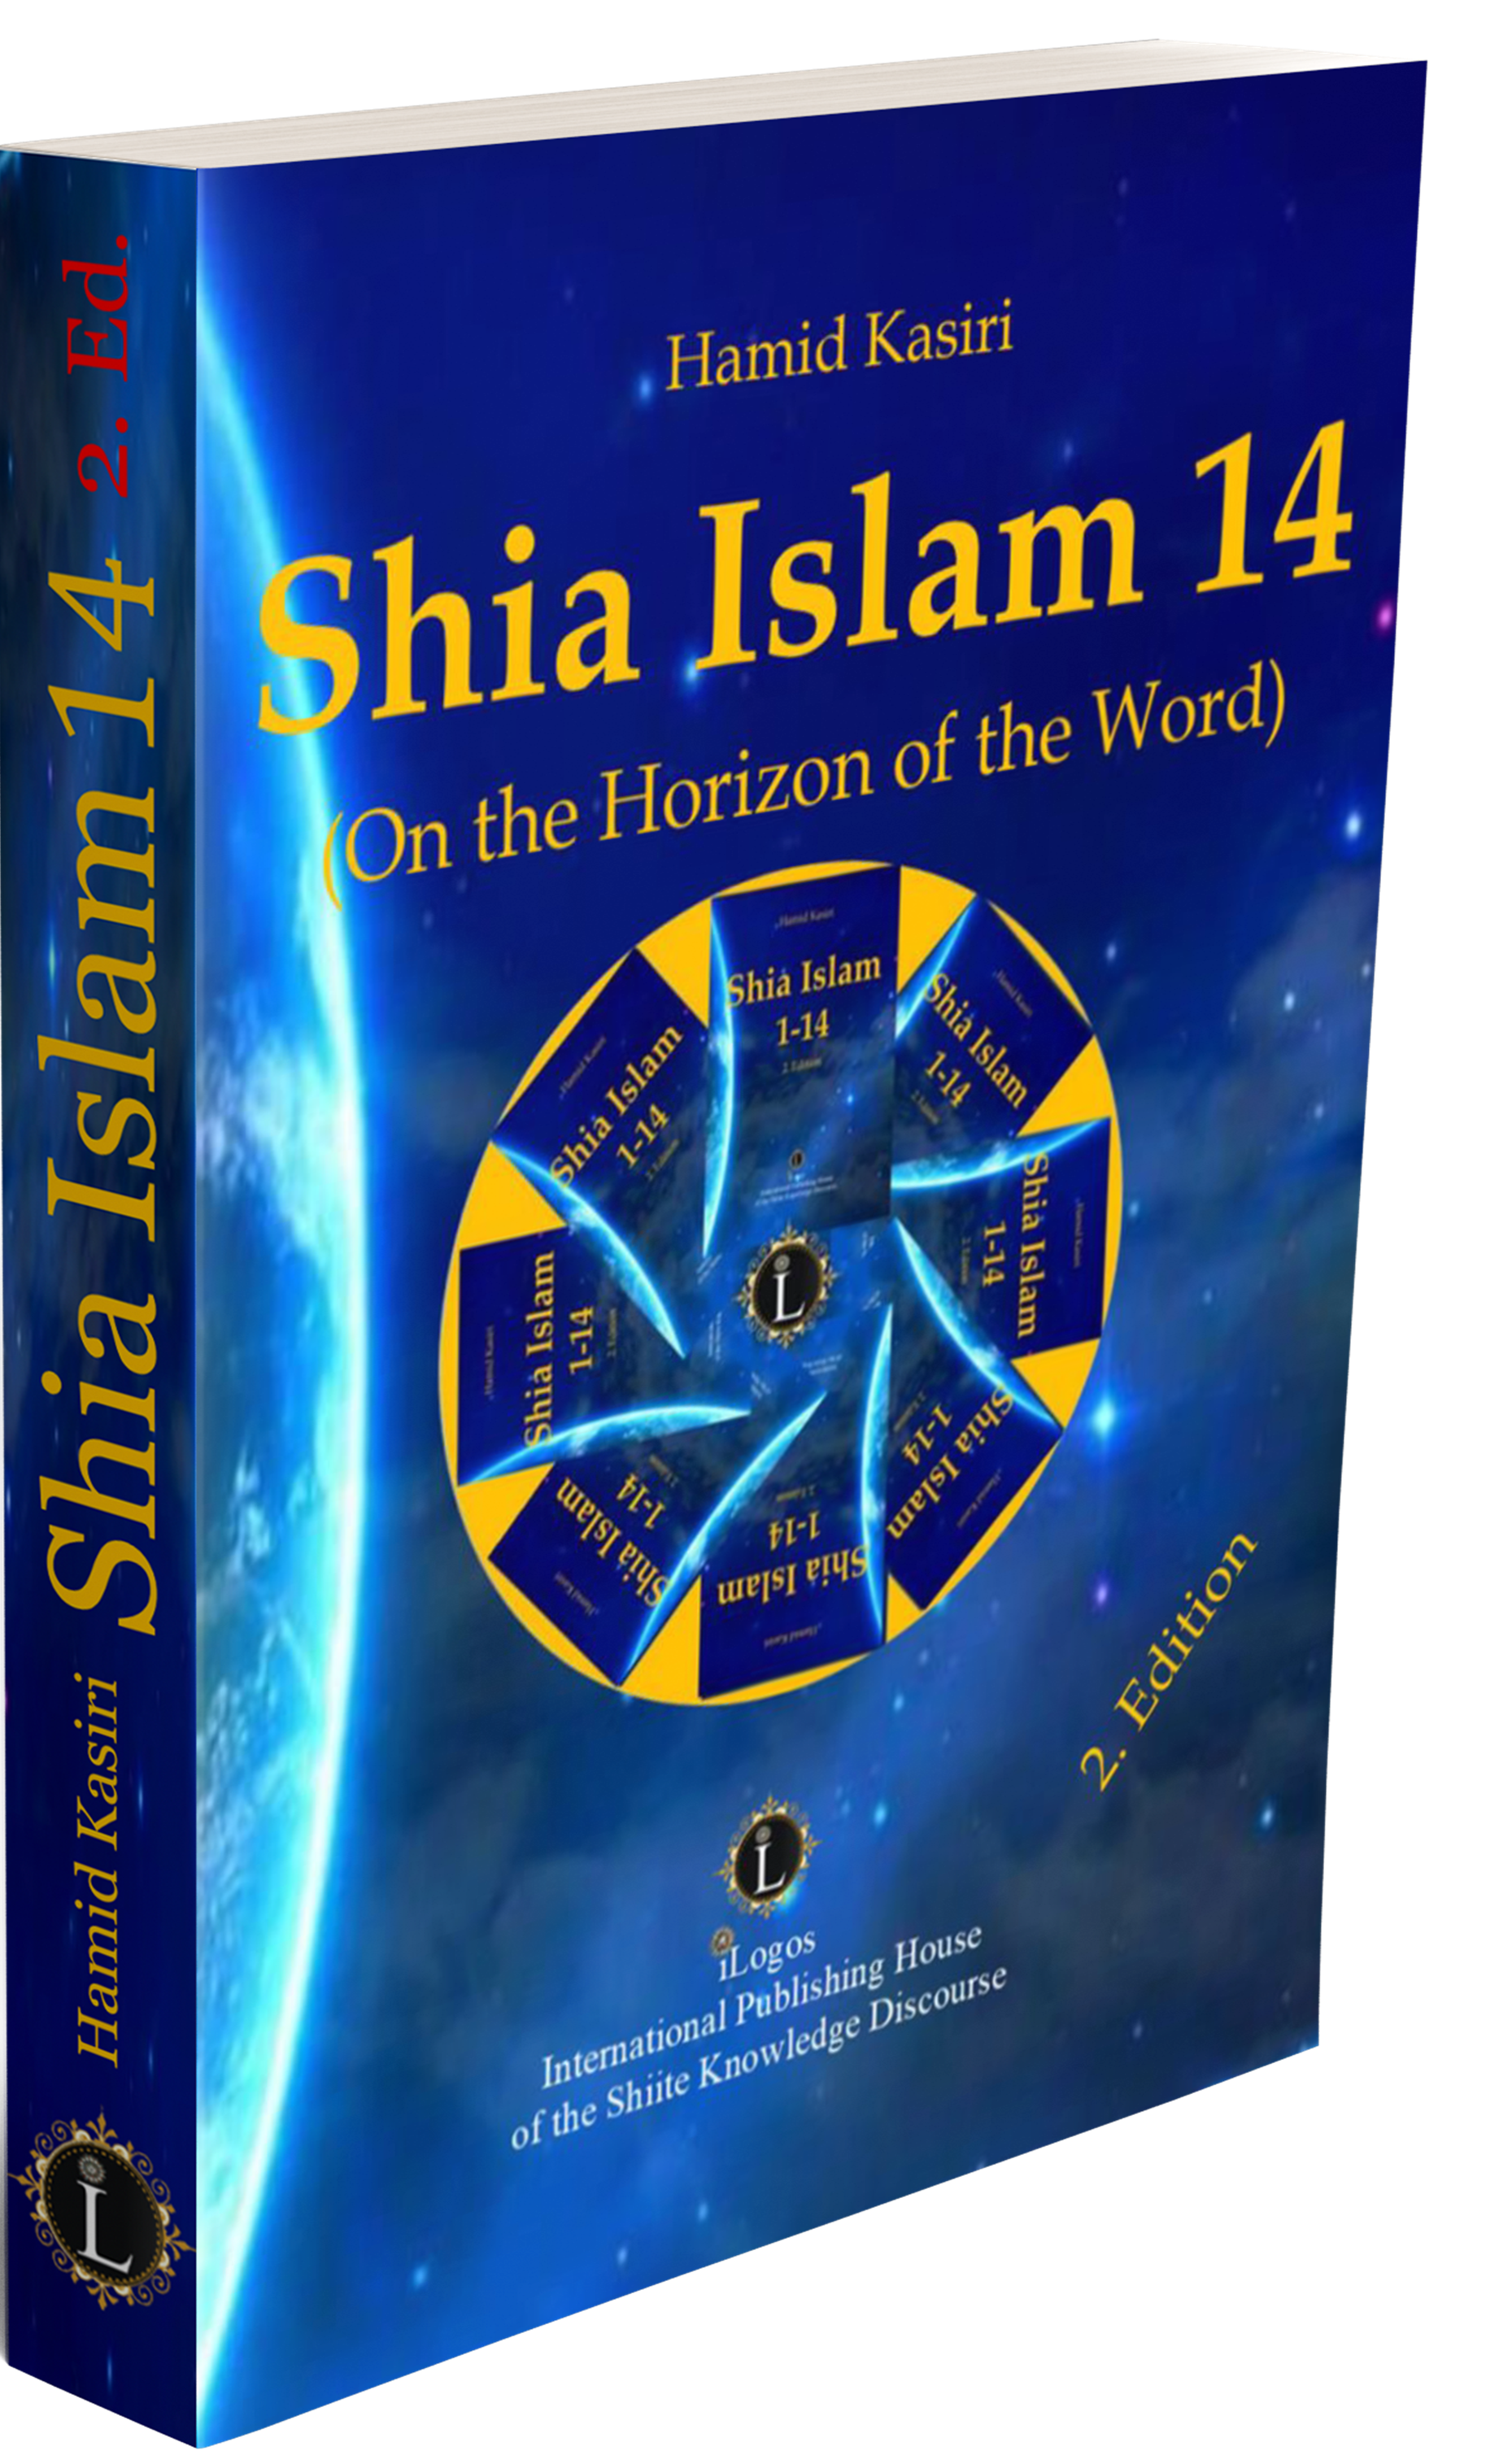 Schia Islam 14 (On the Horizon of the Word), 2. Ed.